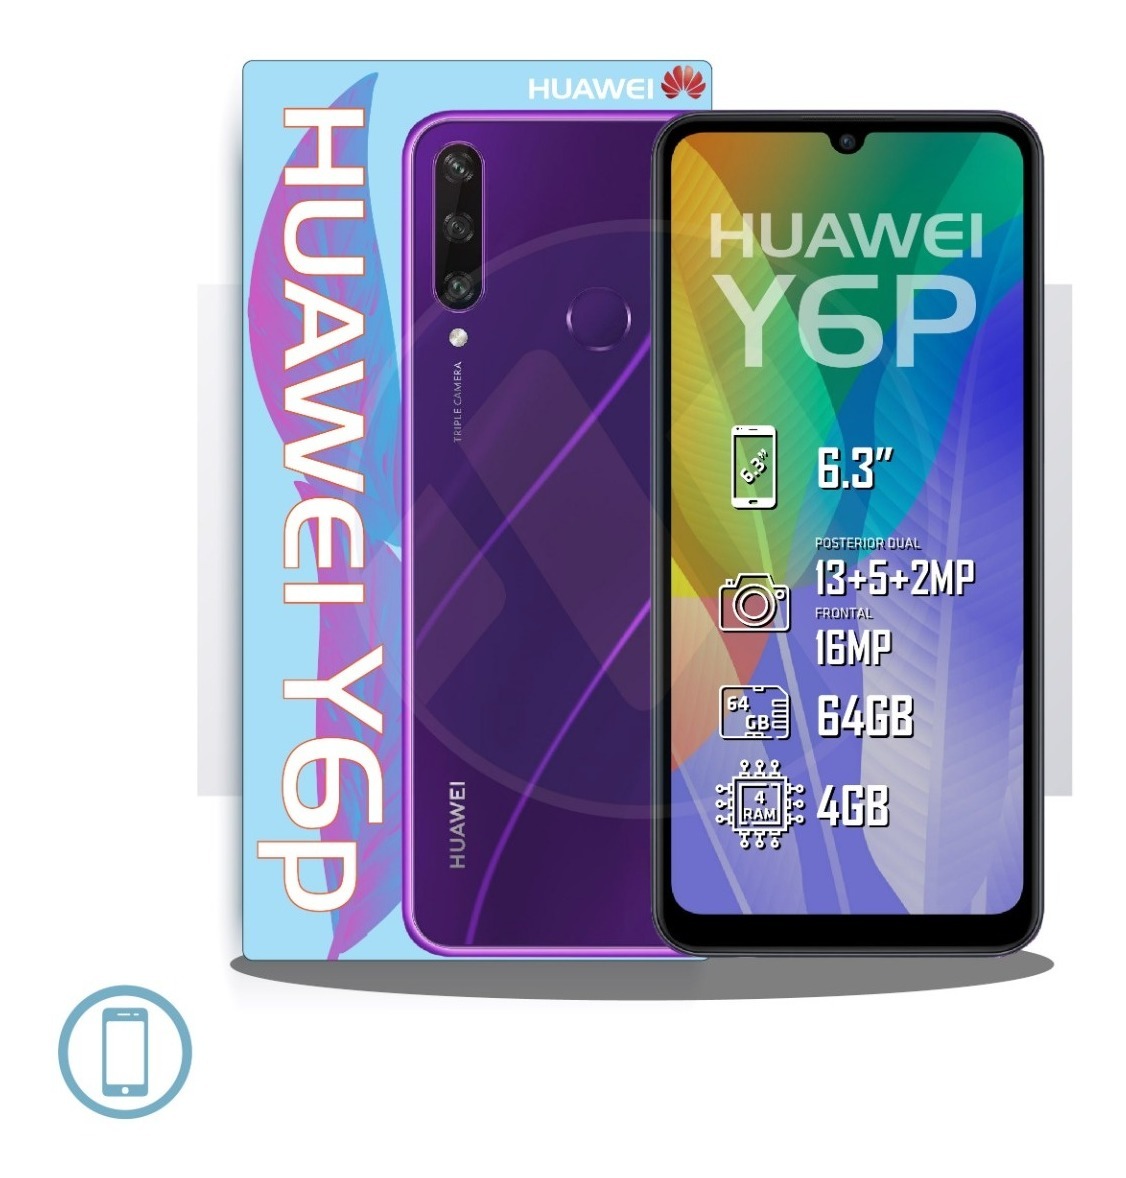 Huawei Y6p 64gb Teléfono Celular Smartphone | Mercado Libre